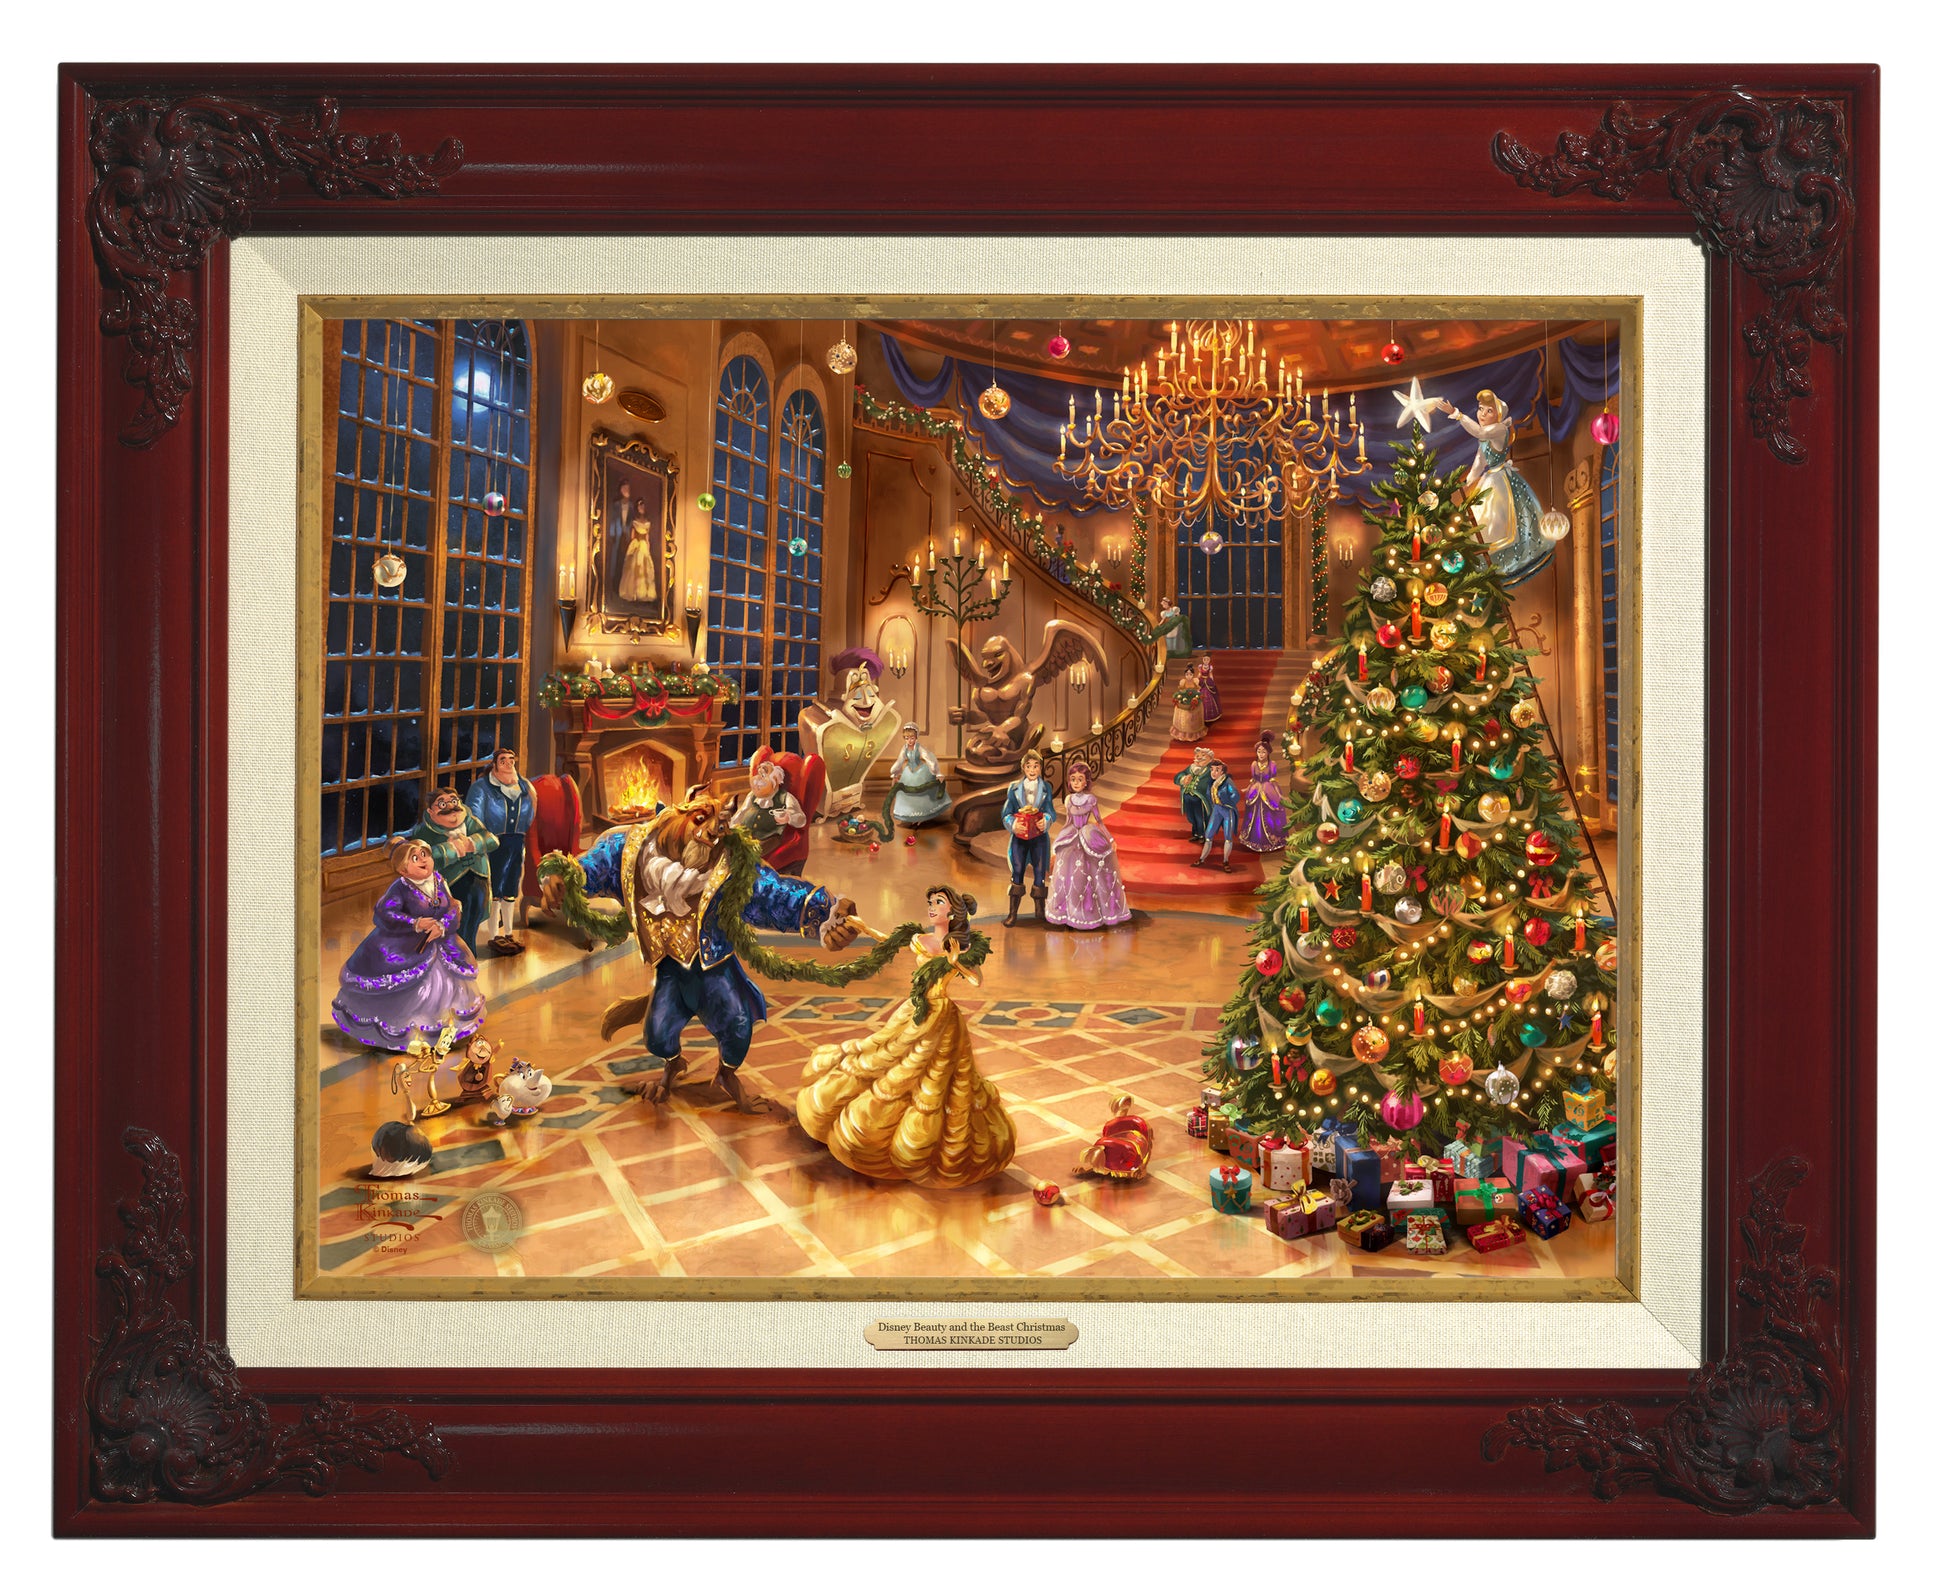 158459_CLF_Disney Beauty and the Beast Christmas Celebration_12x16_Framed_Classic Brandy.jpg